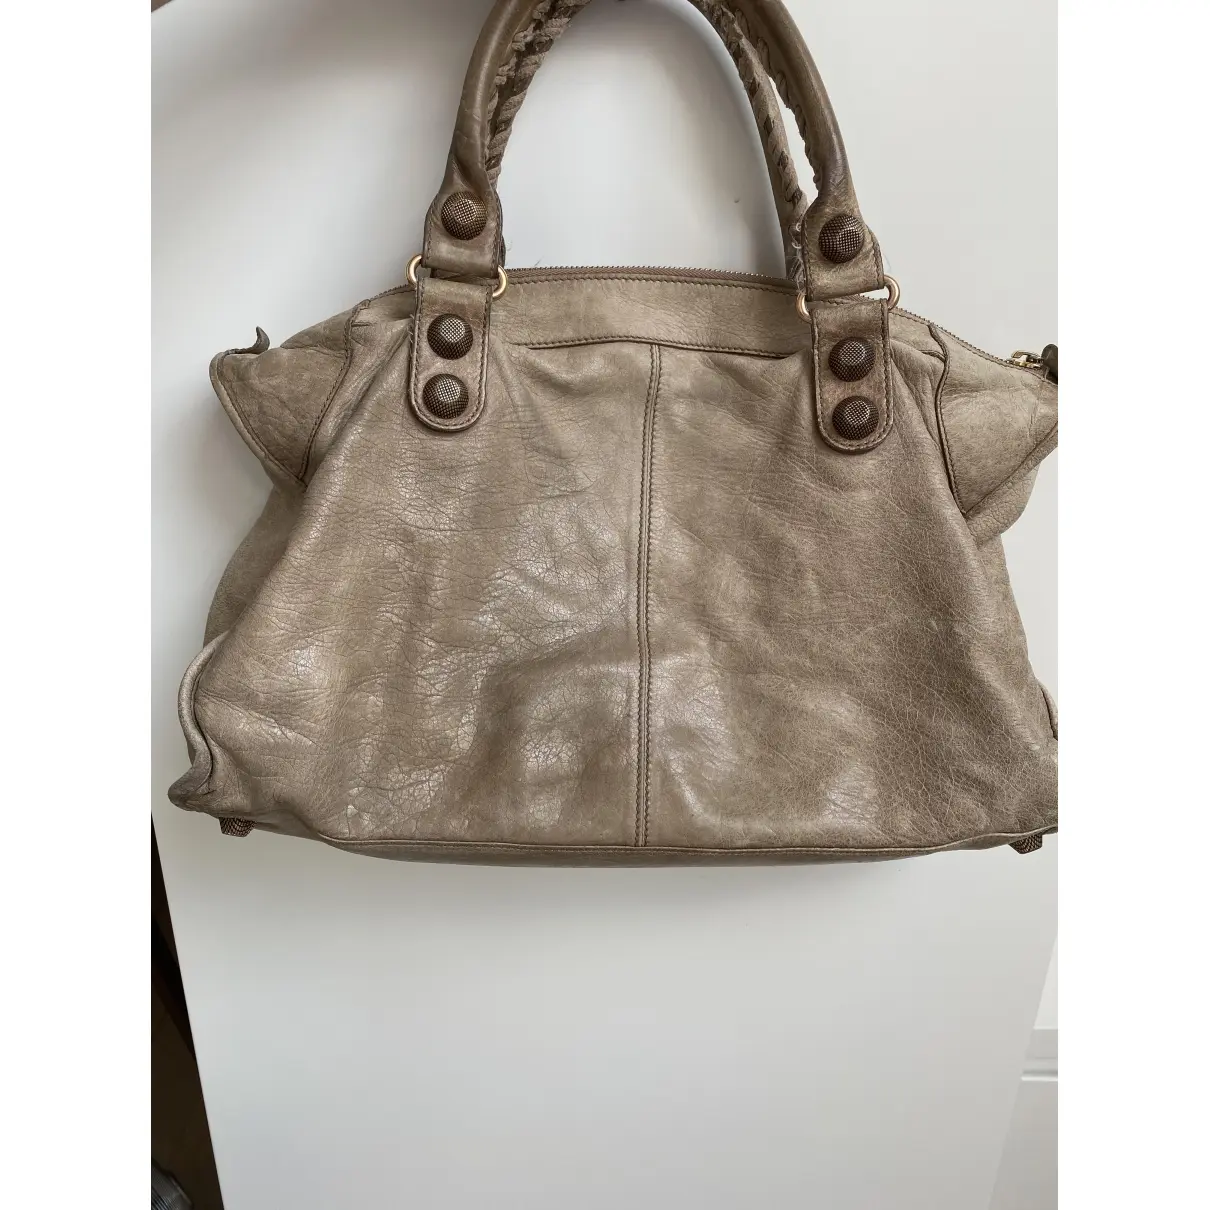 Buy Balenciaga Part Time leather handbag online